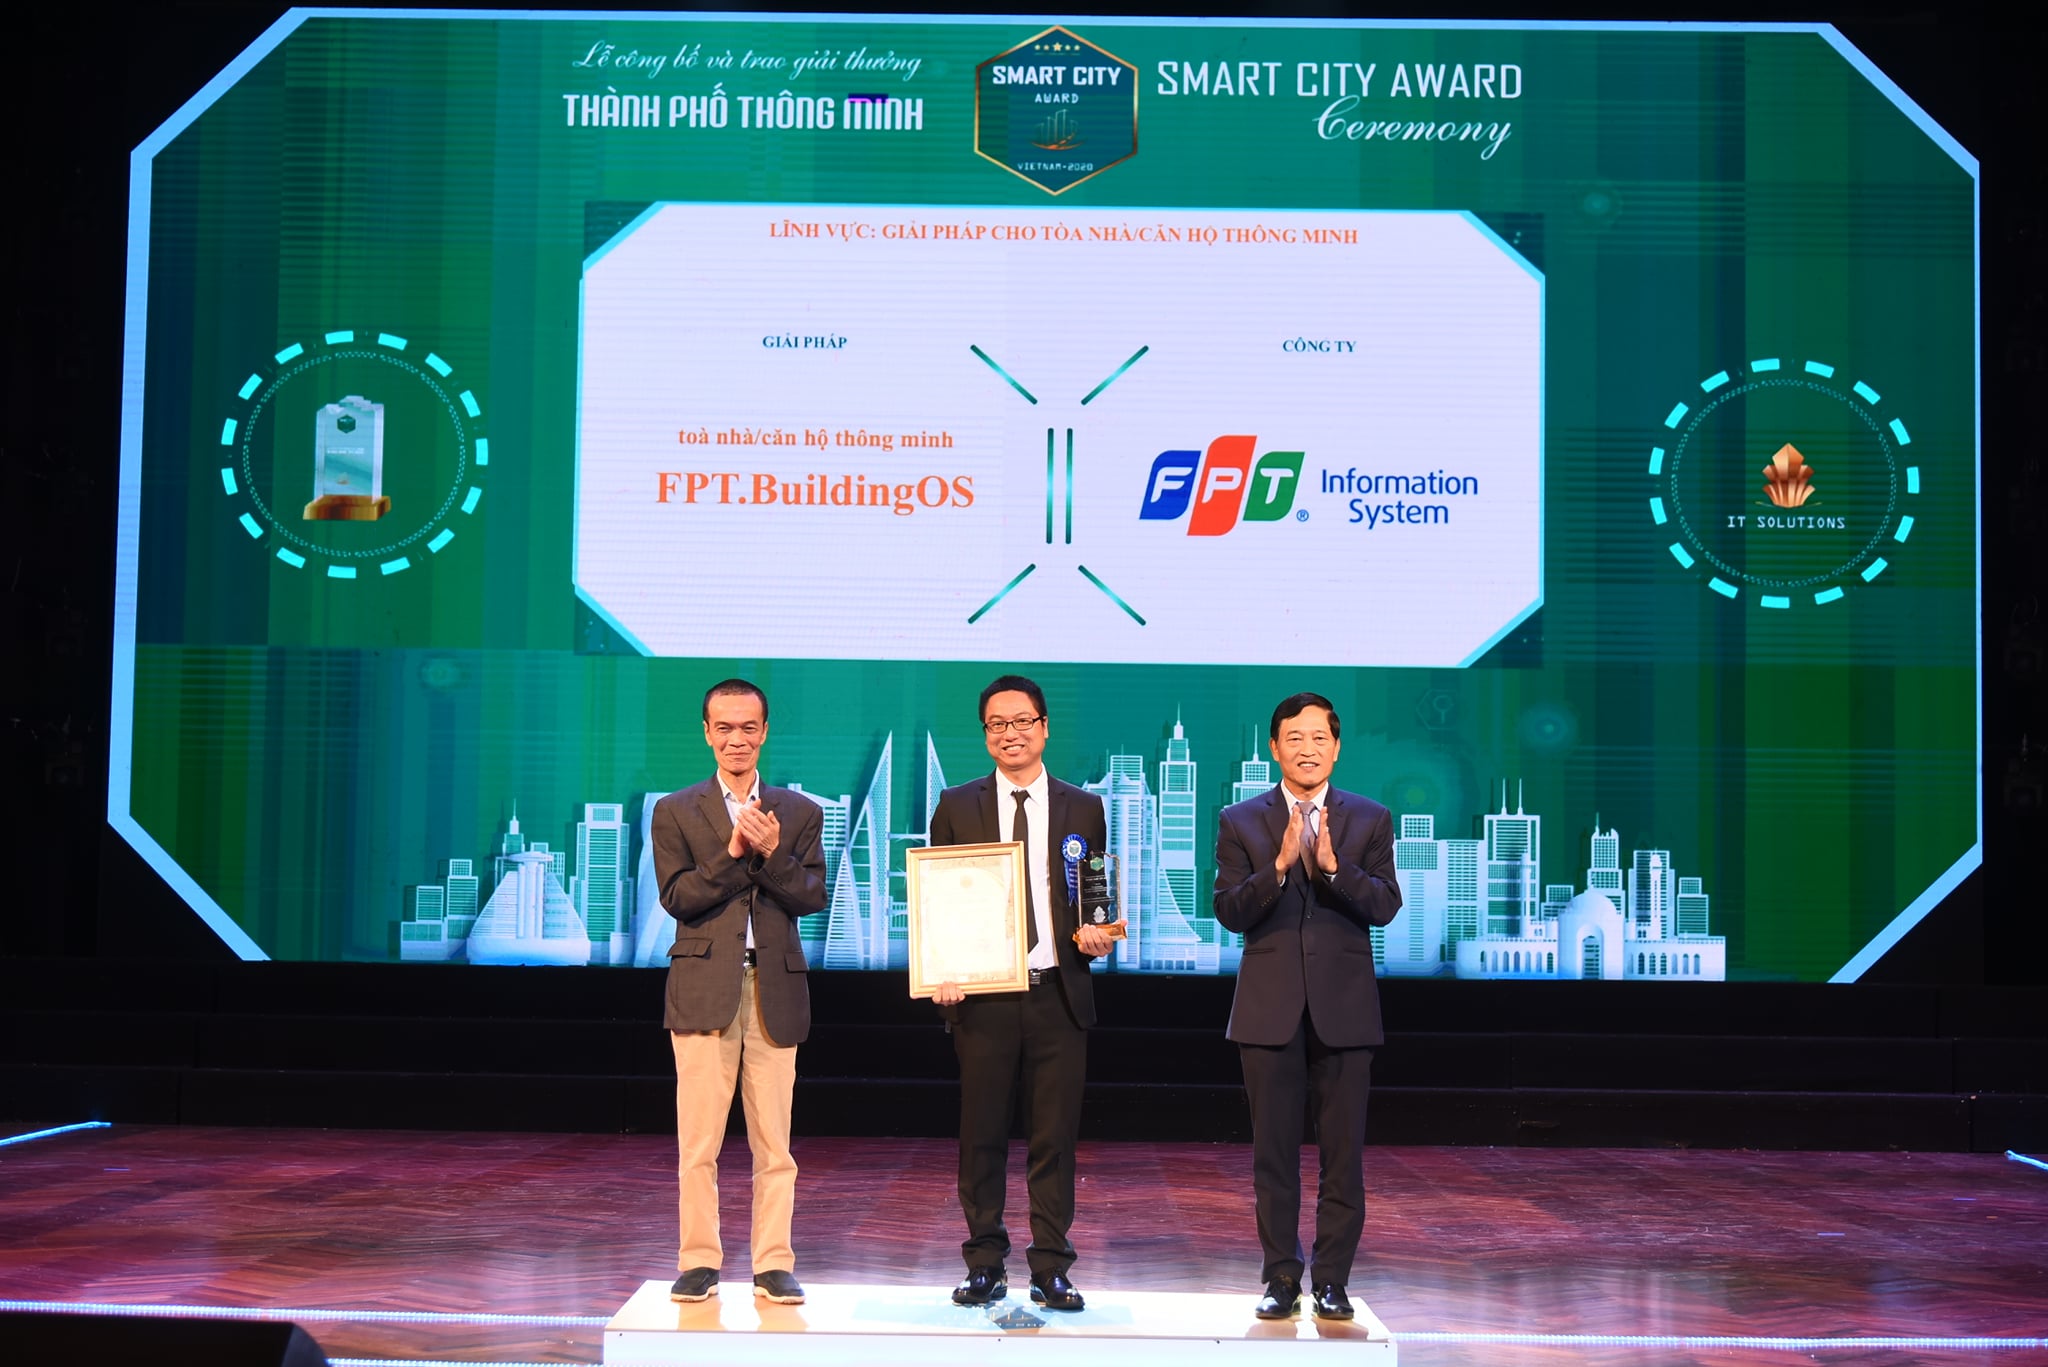 2020 Vietnam Smart City Awards – Smart Building/Dwelling Solution (FPT.BuildingOS)